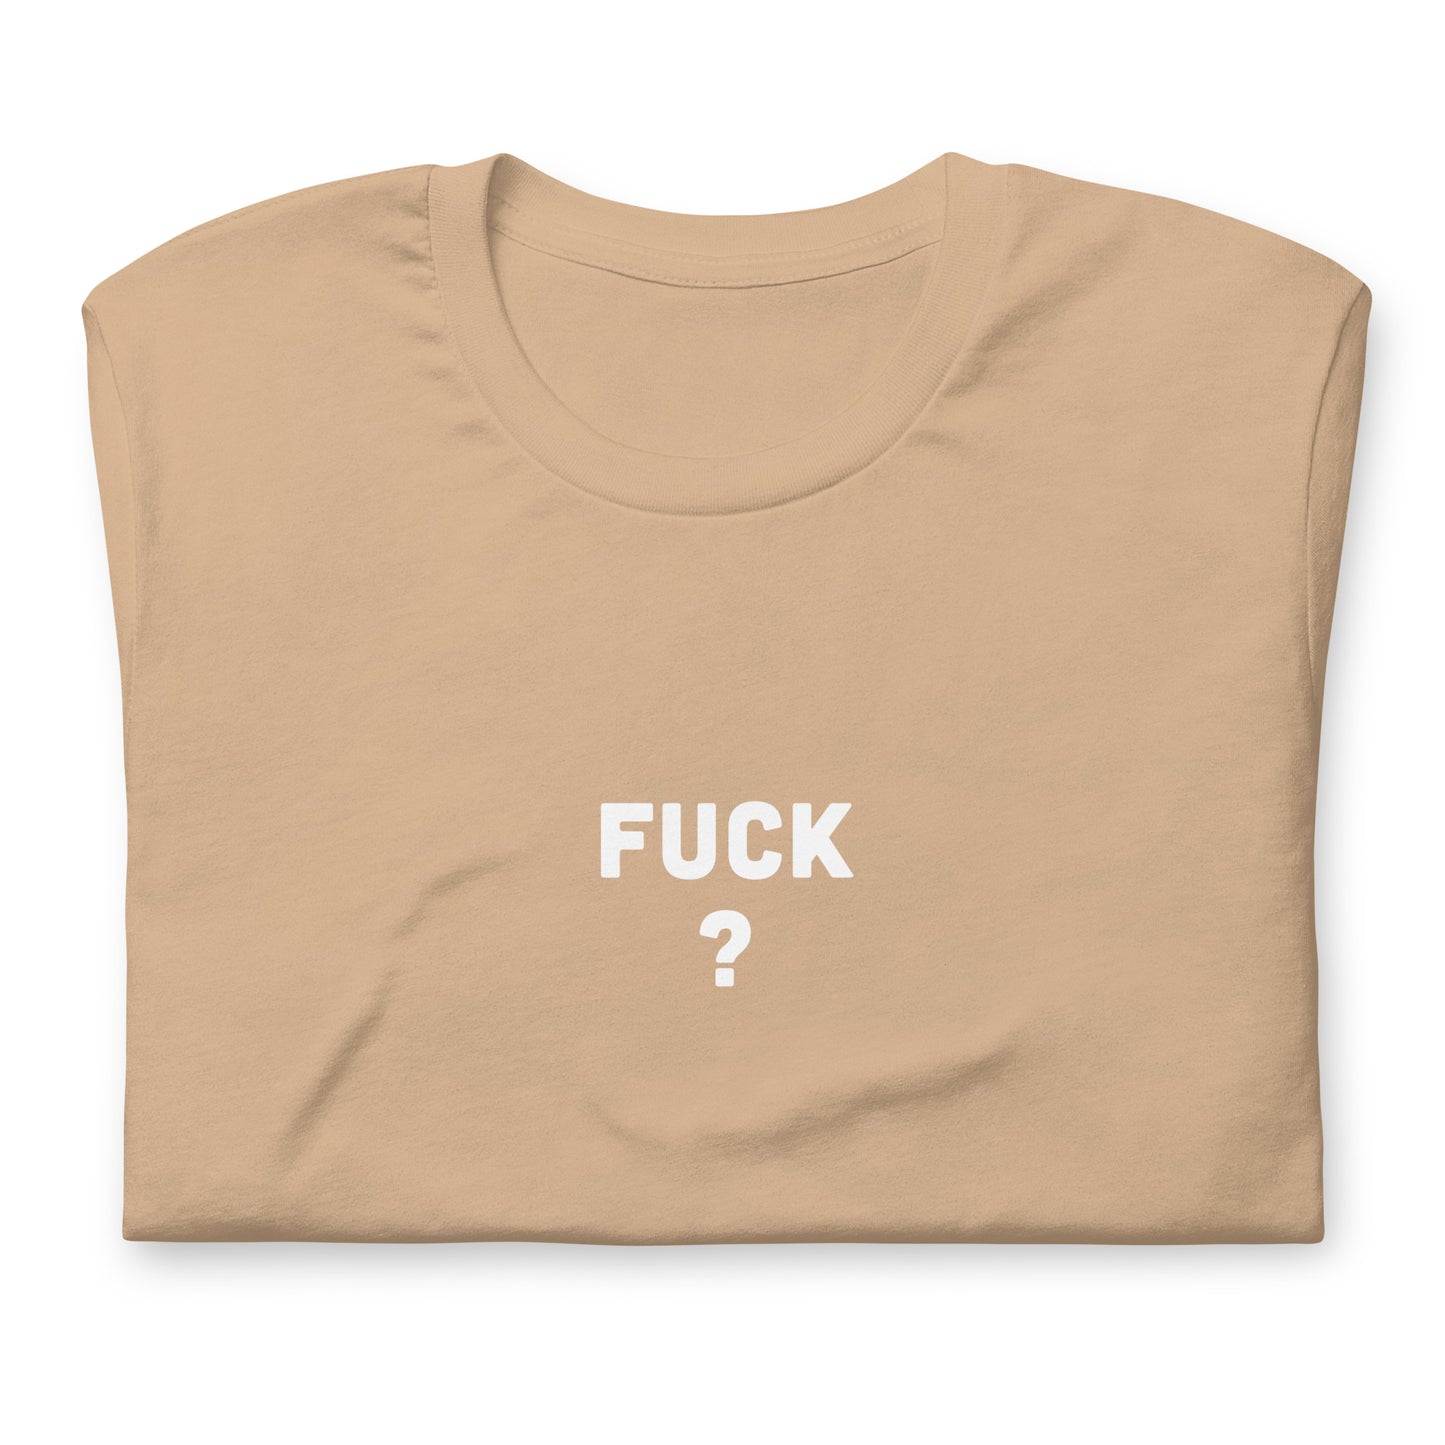 Fuck T-Shirt Size XL Color Forest